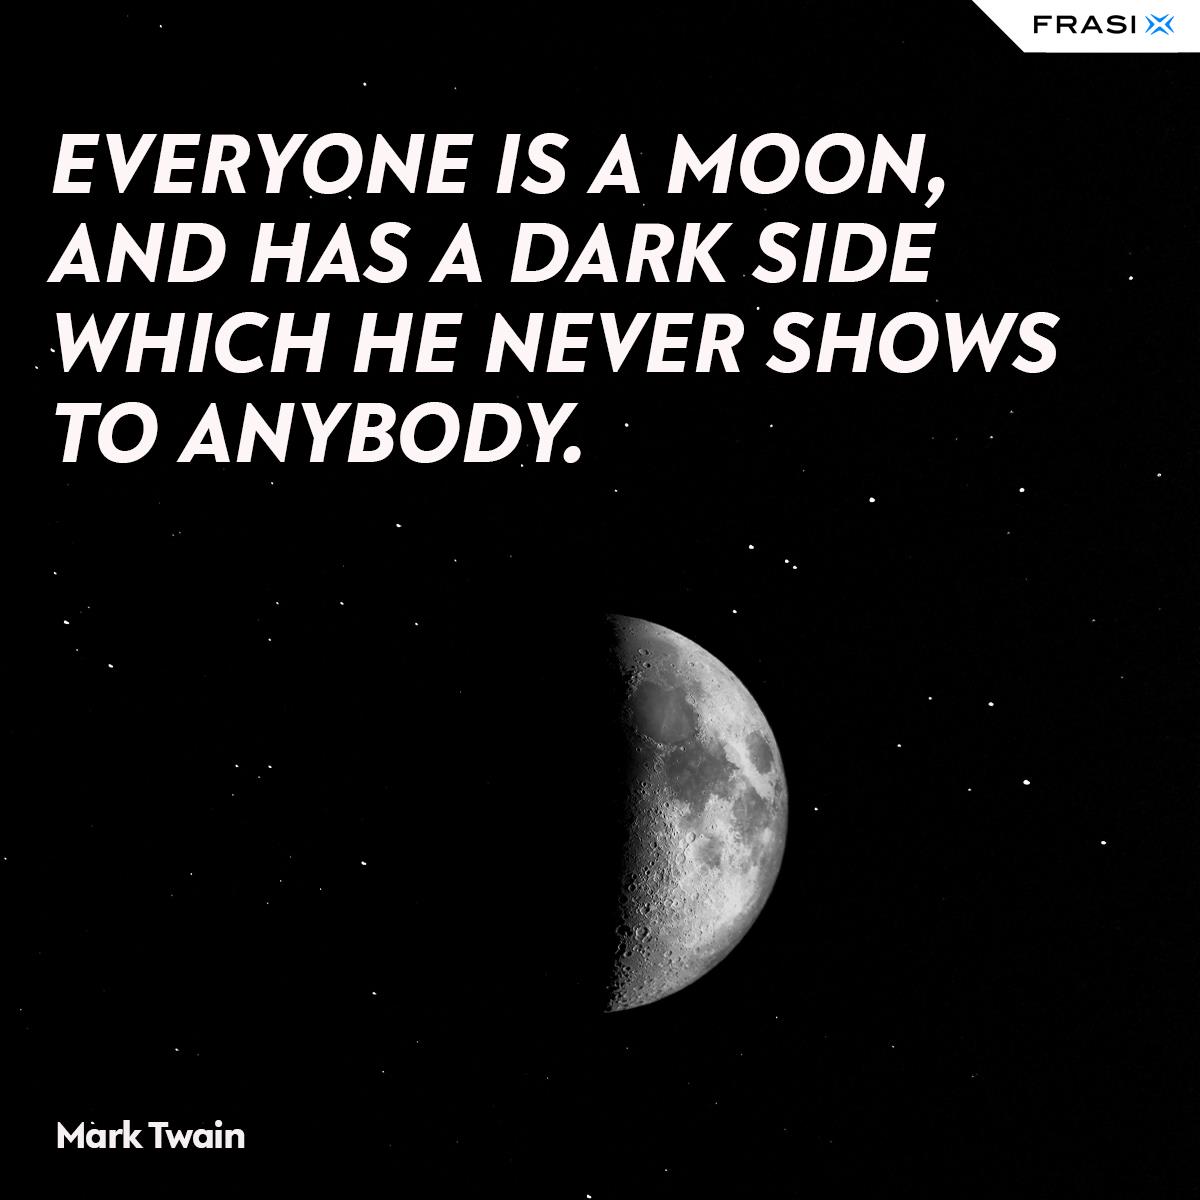 Frasi sulla luna Mark Twain in inglese